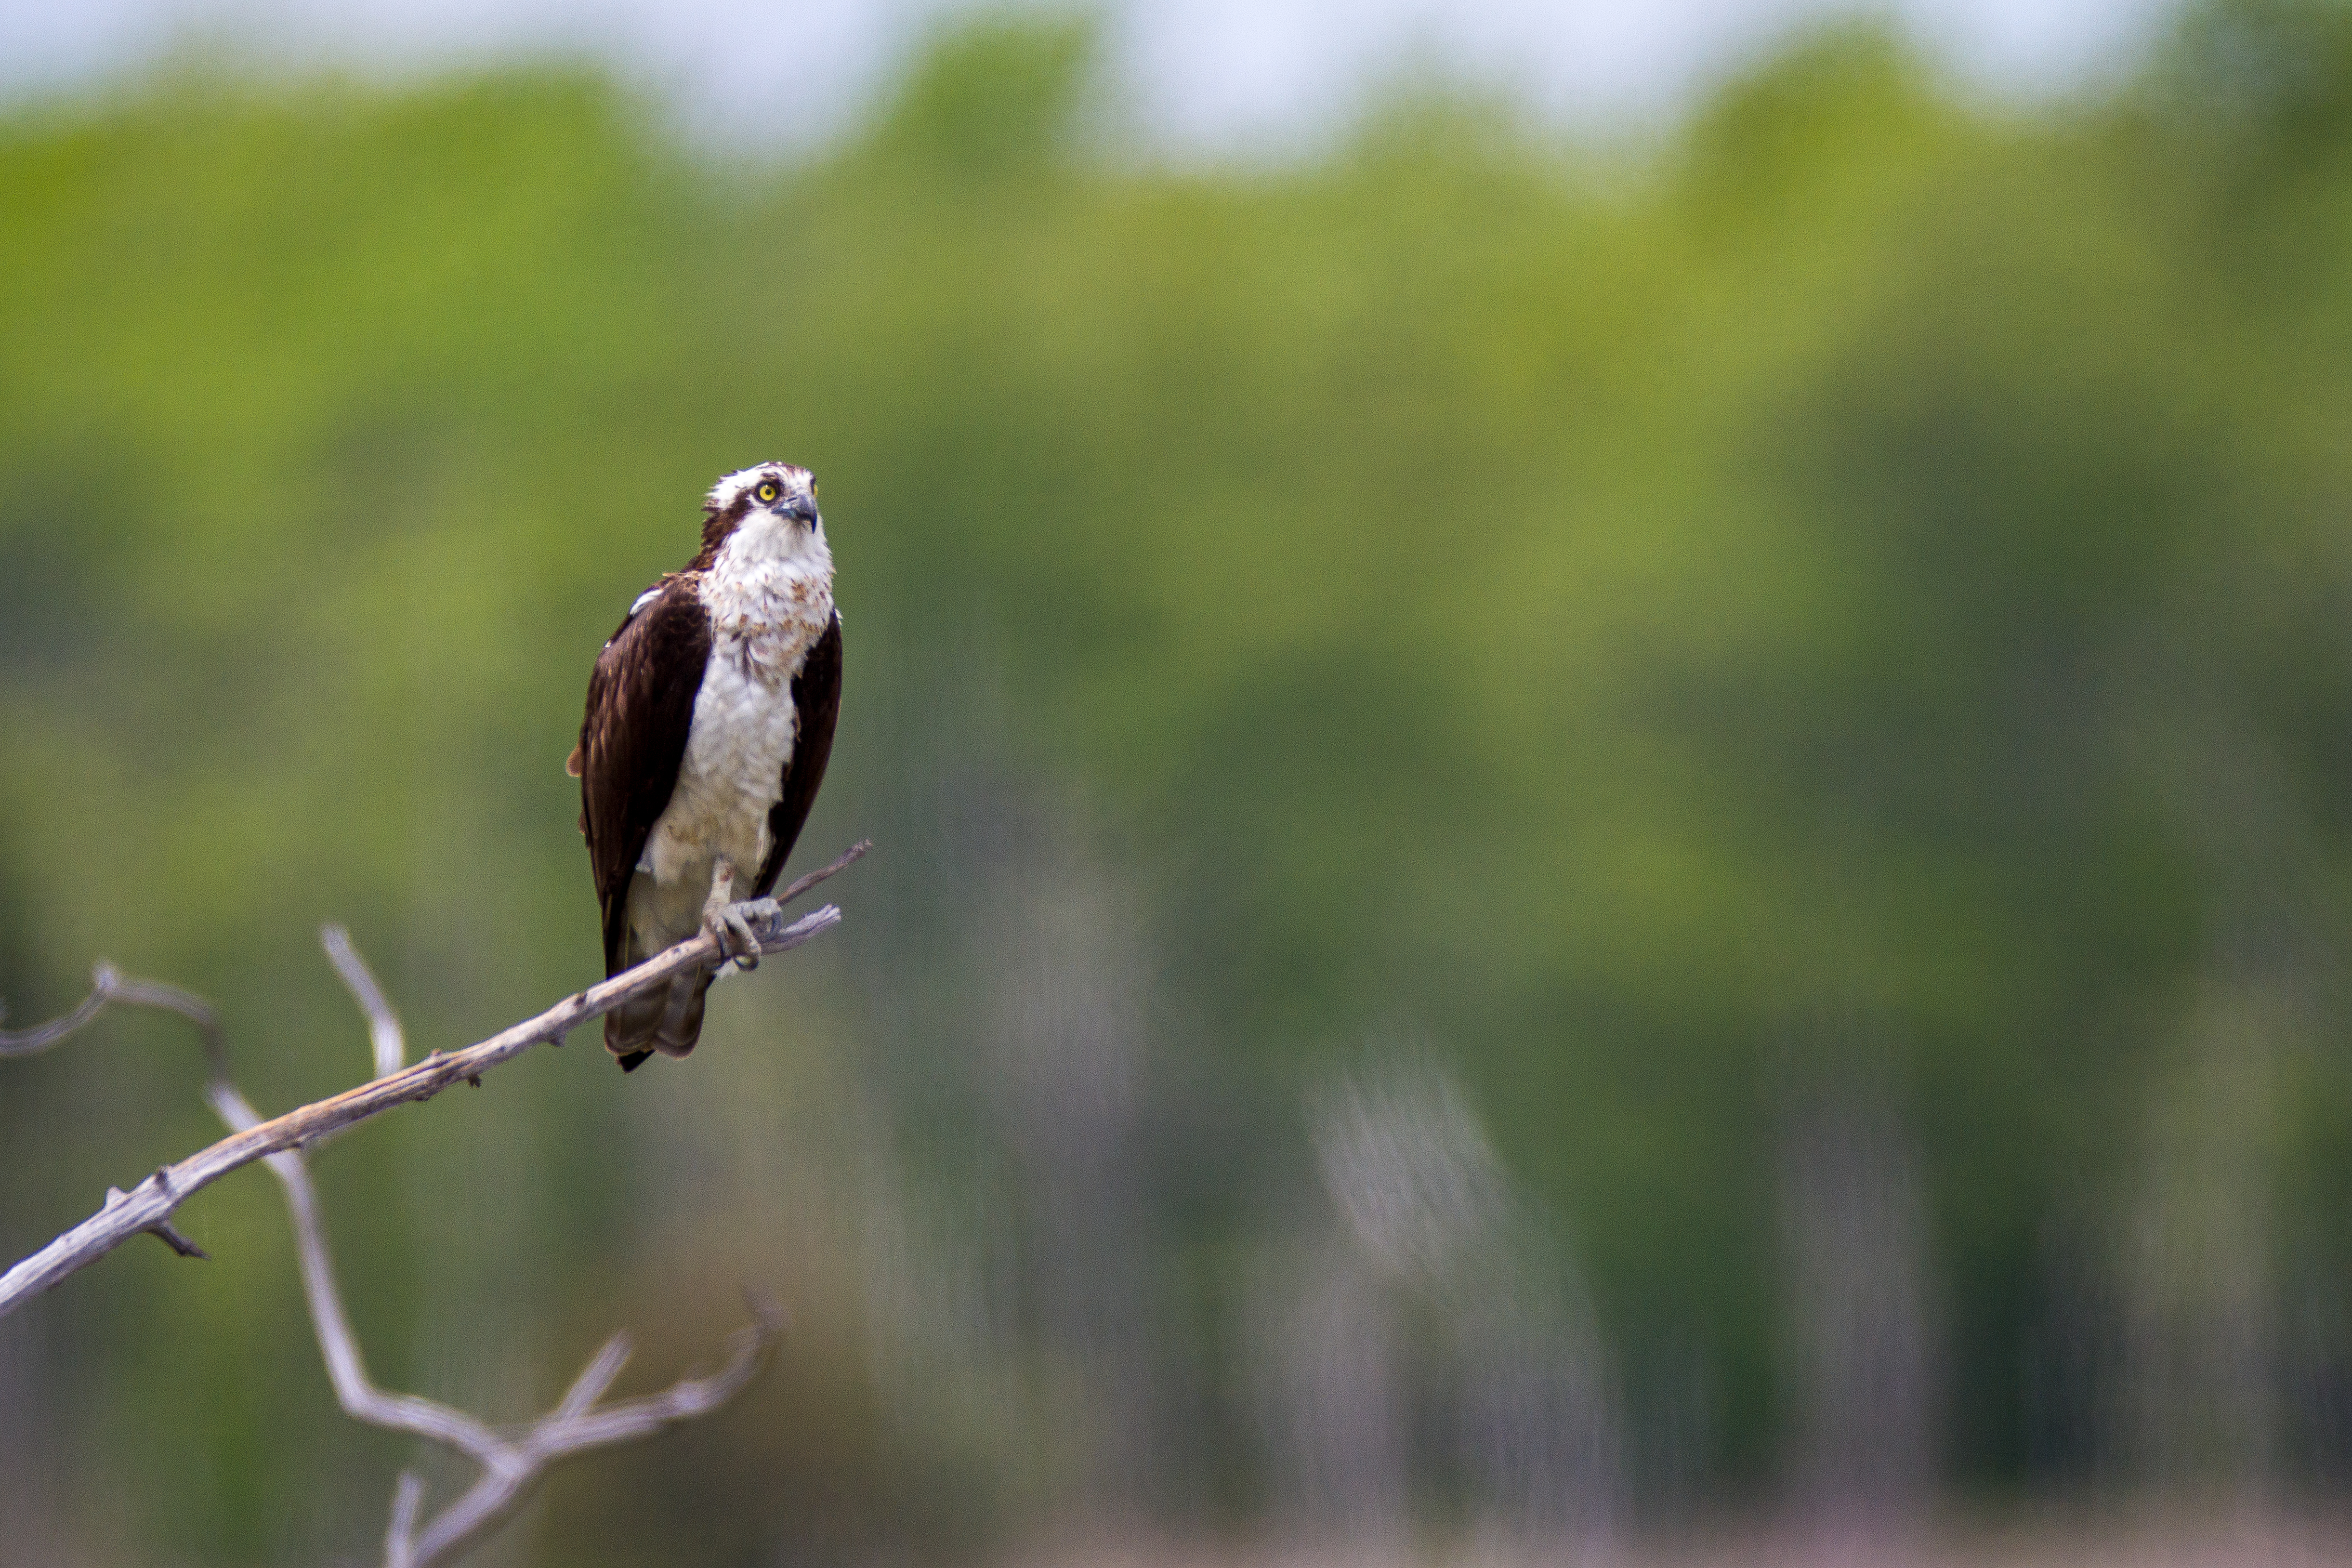 An osprey bird sits on a branch